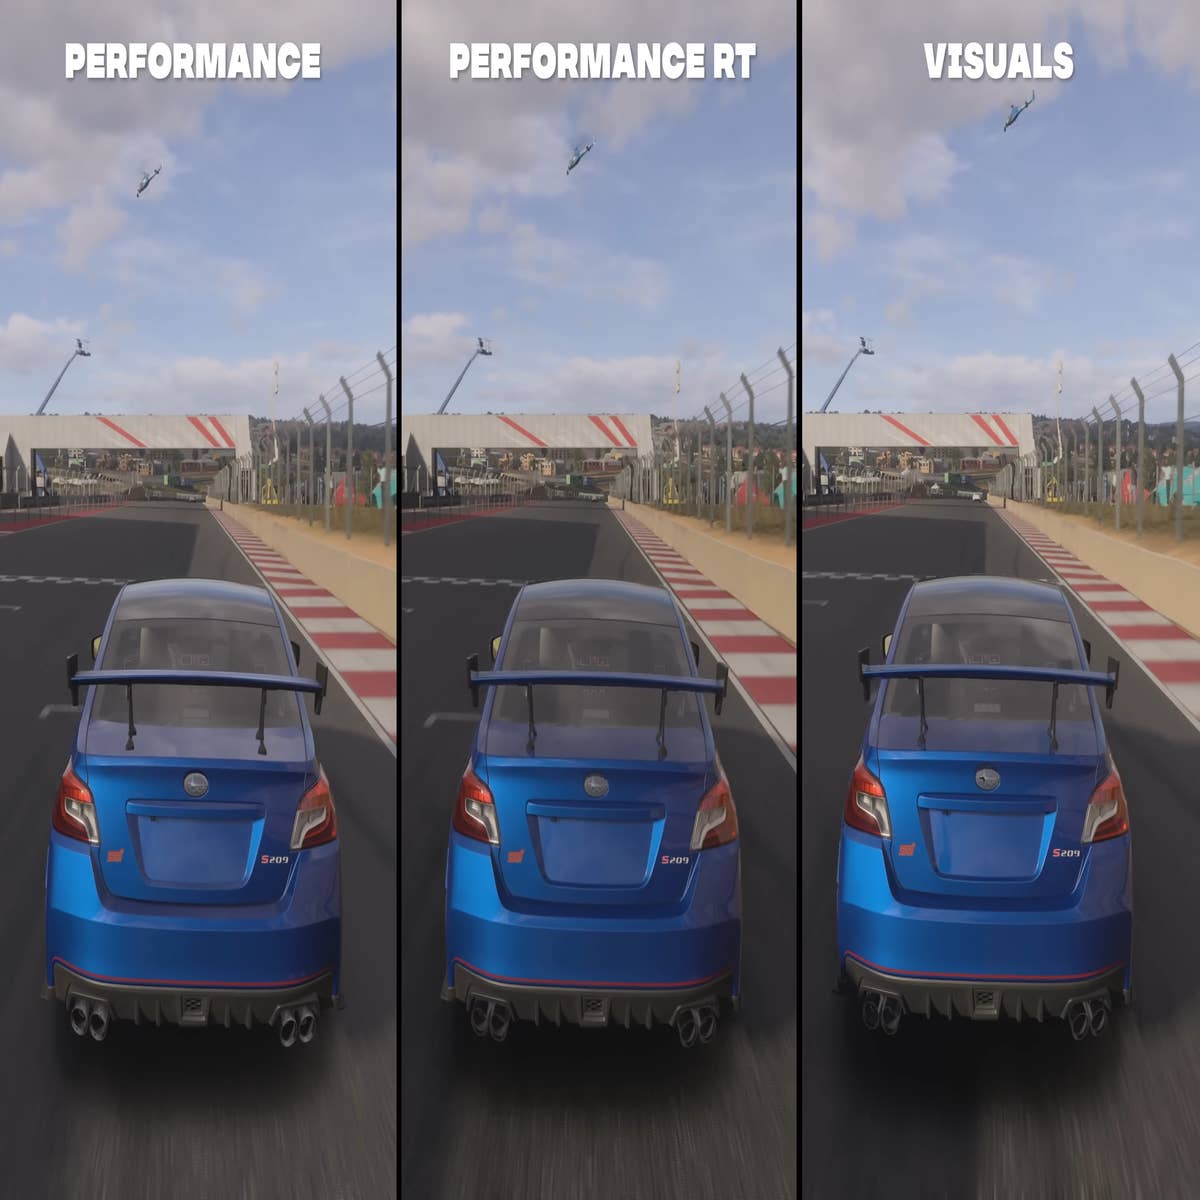 Revisão  Forza Motorsport – XboxEra